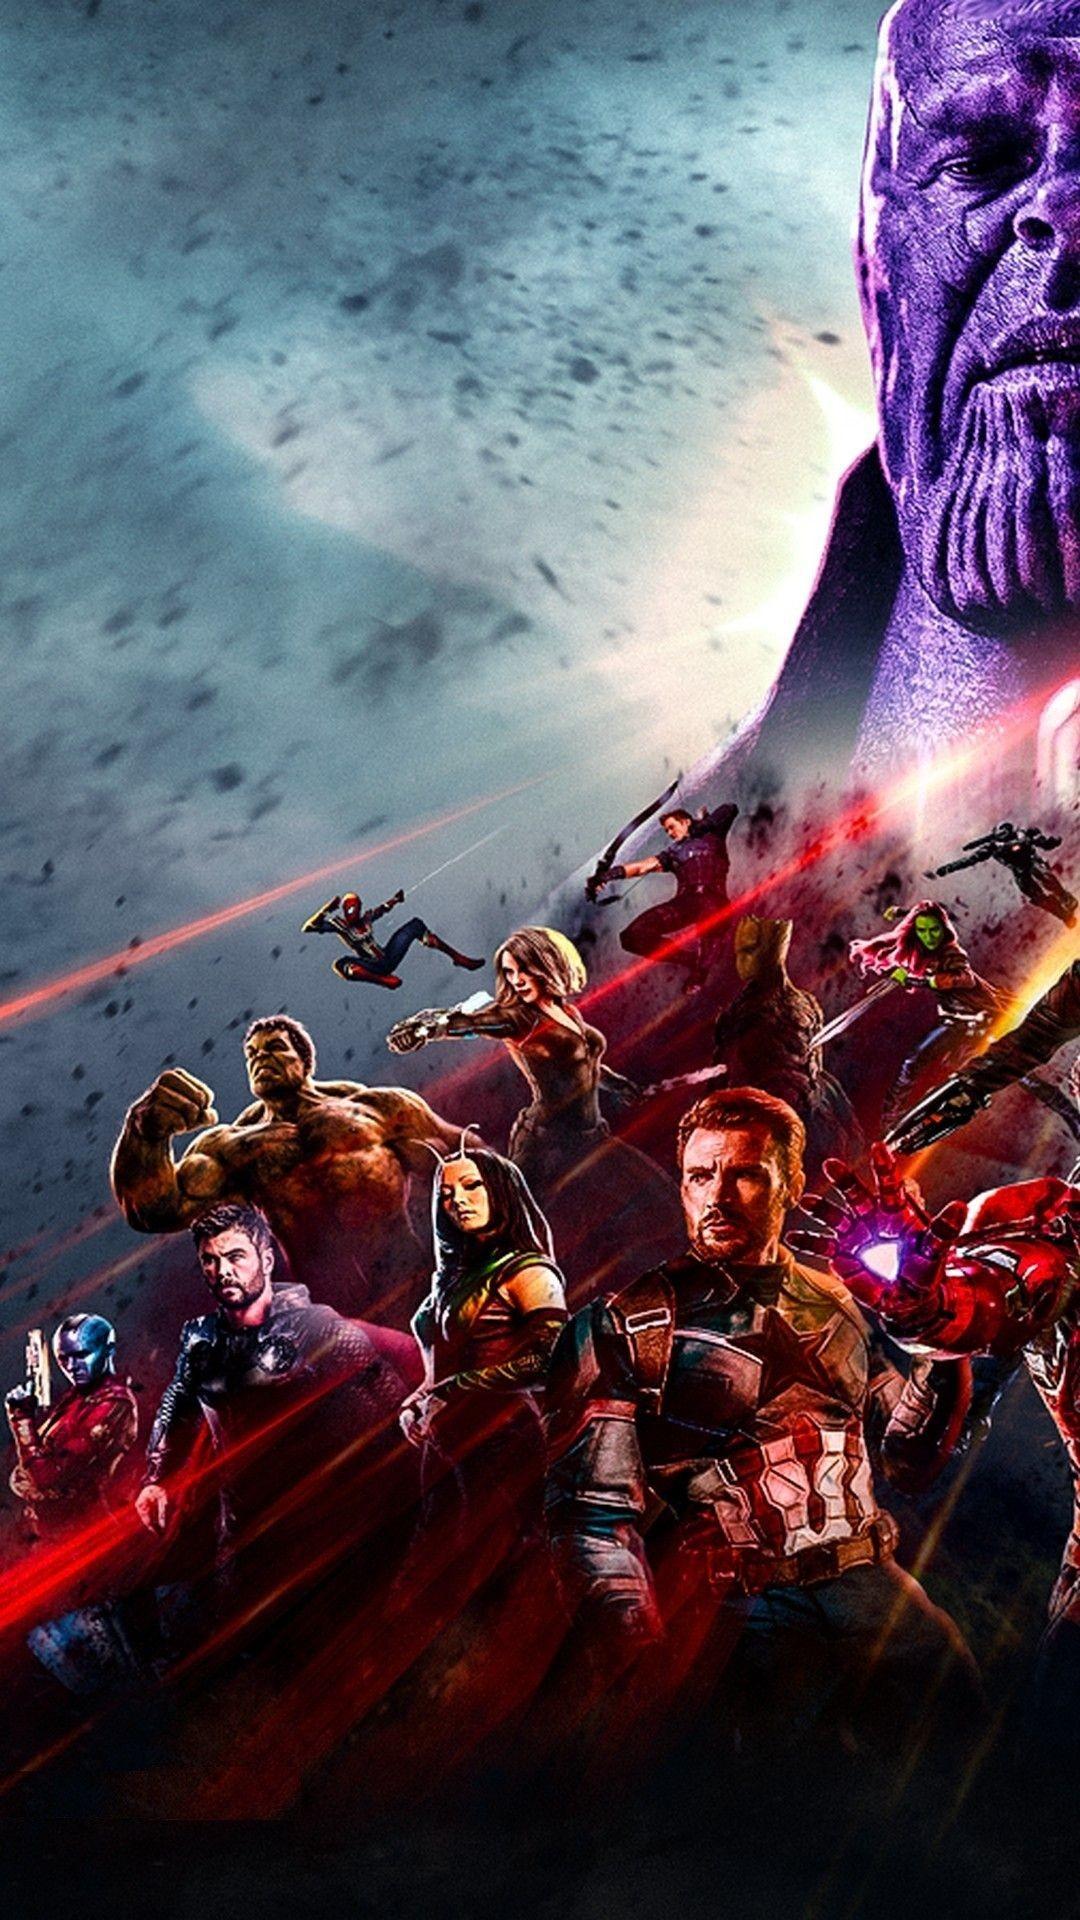 300+] Avengers Endgame Wallpapers | Wallpapers.com